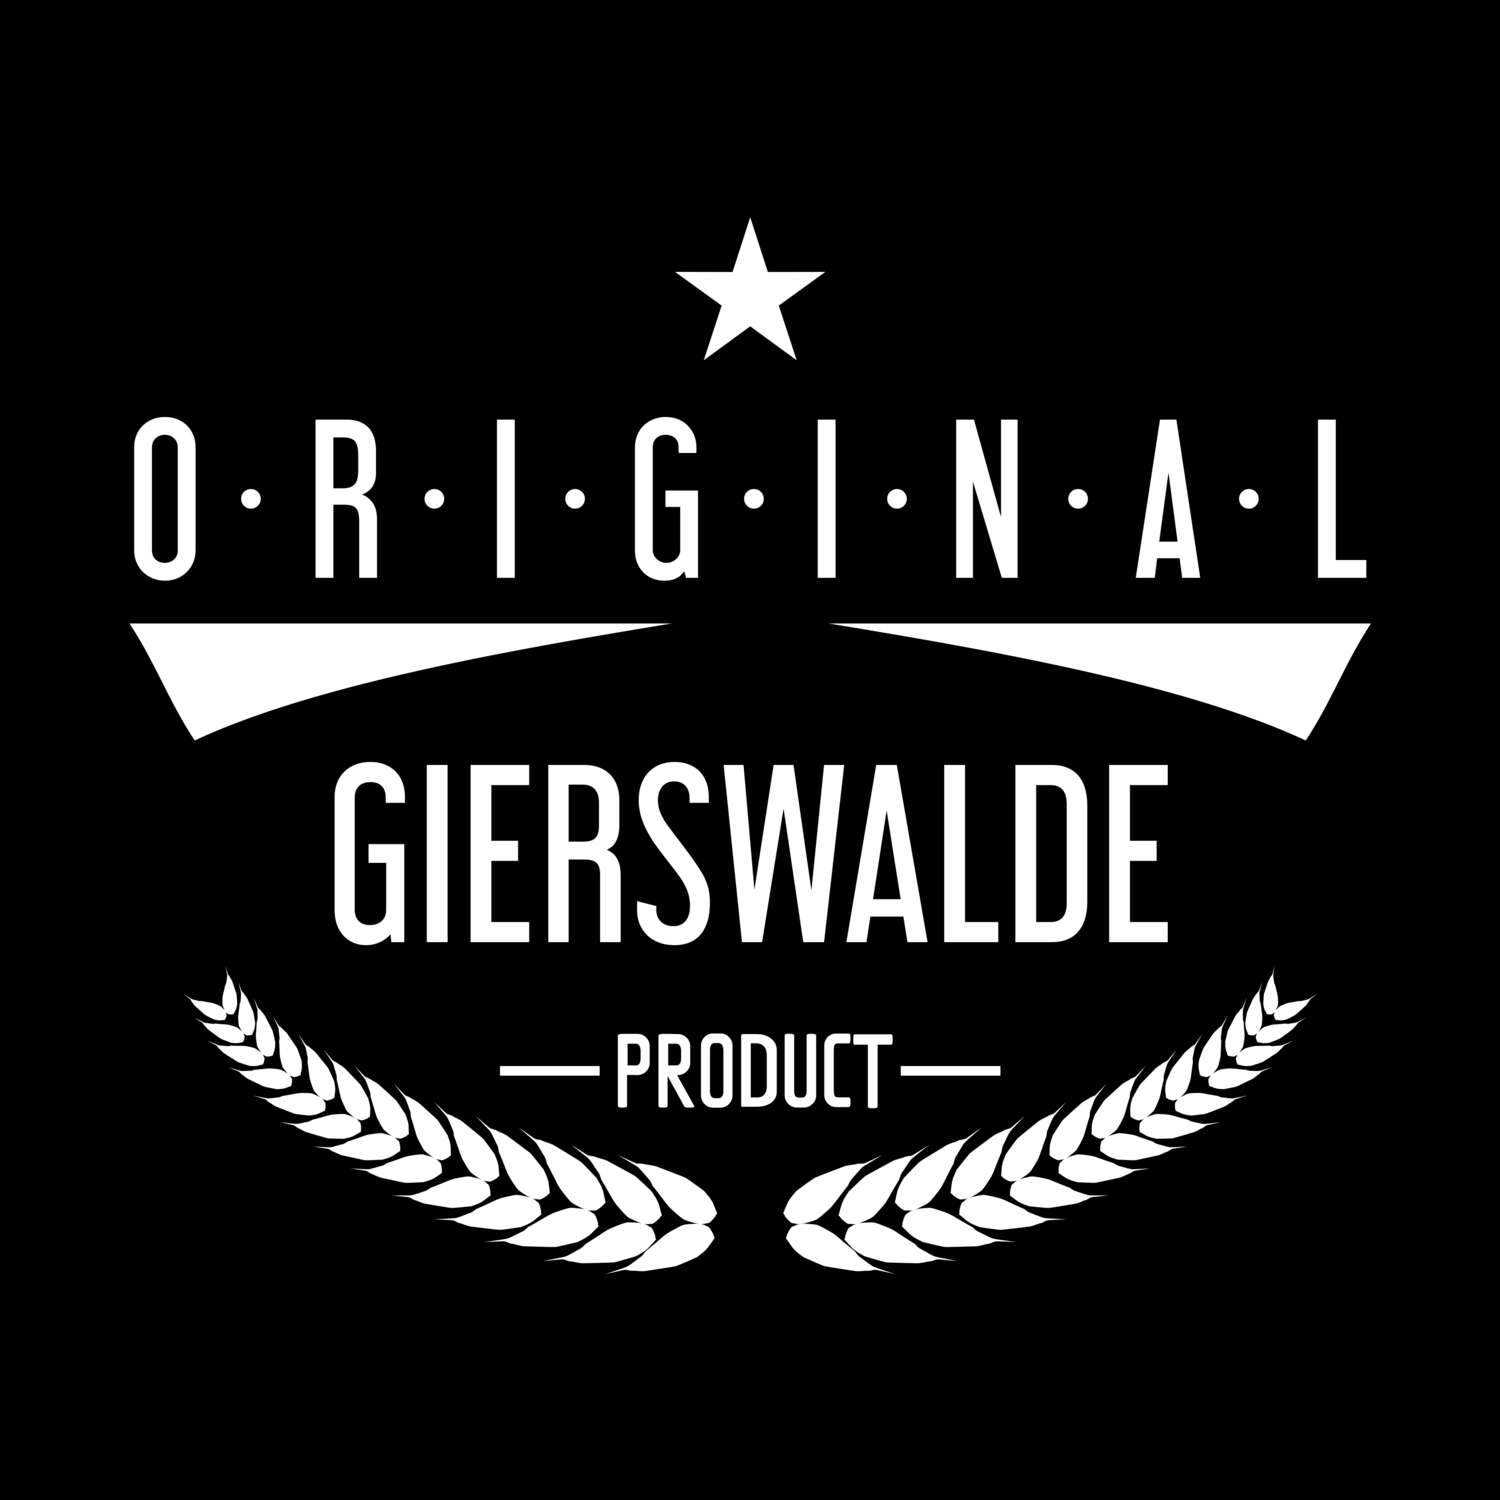 Gierswalde T-Shirt »Original Product«